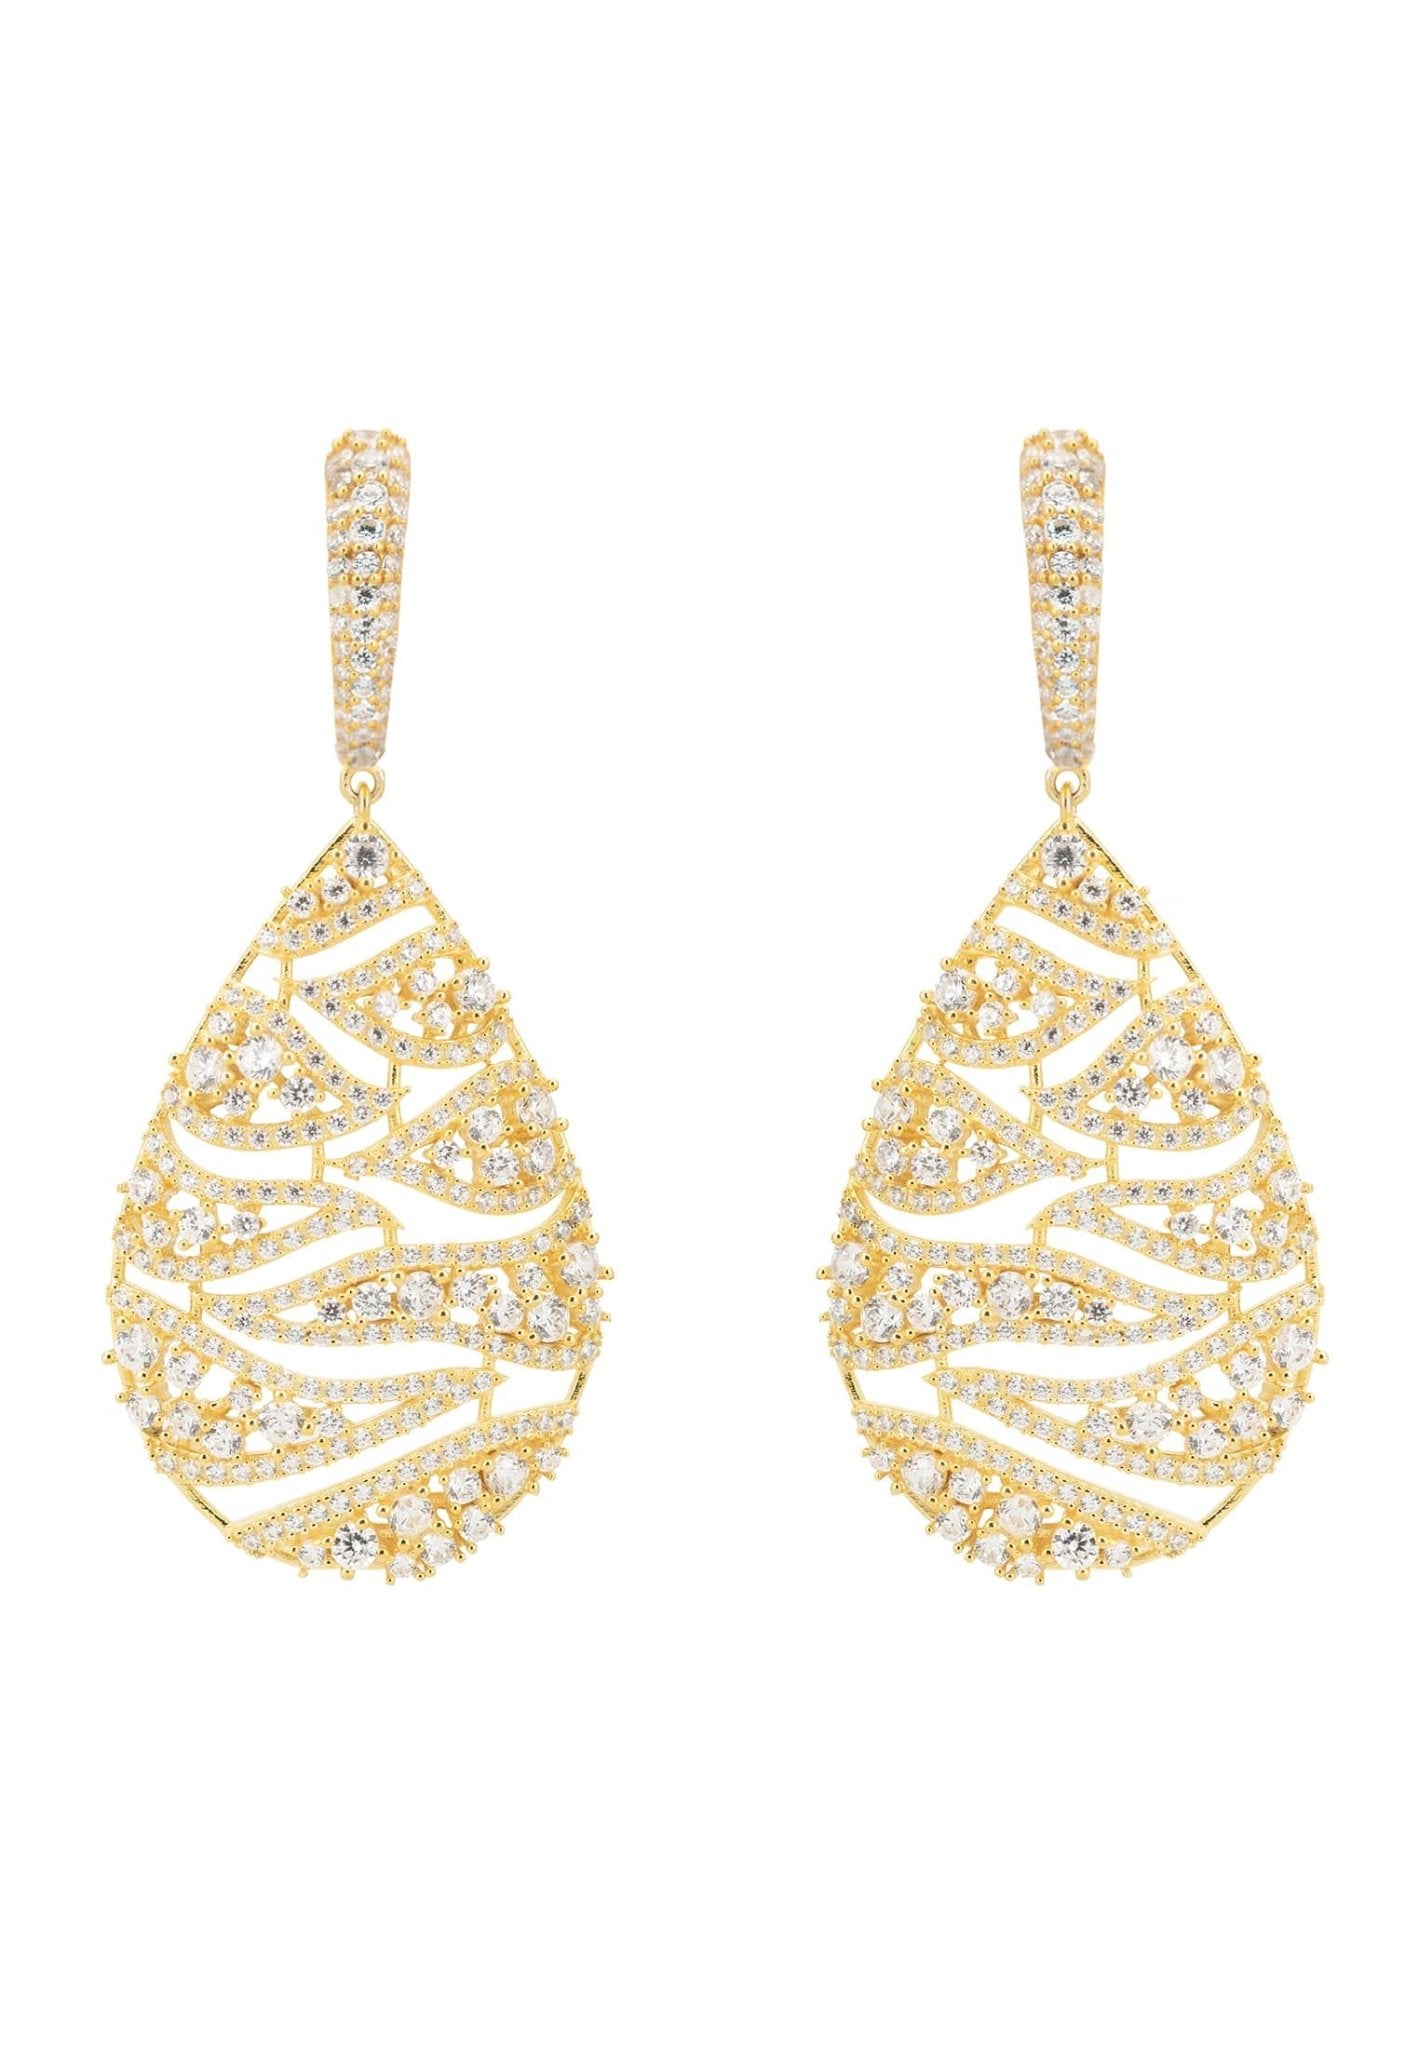 Panama Earrings White Gold - LATELITA Earrings